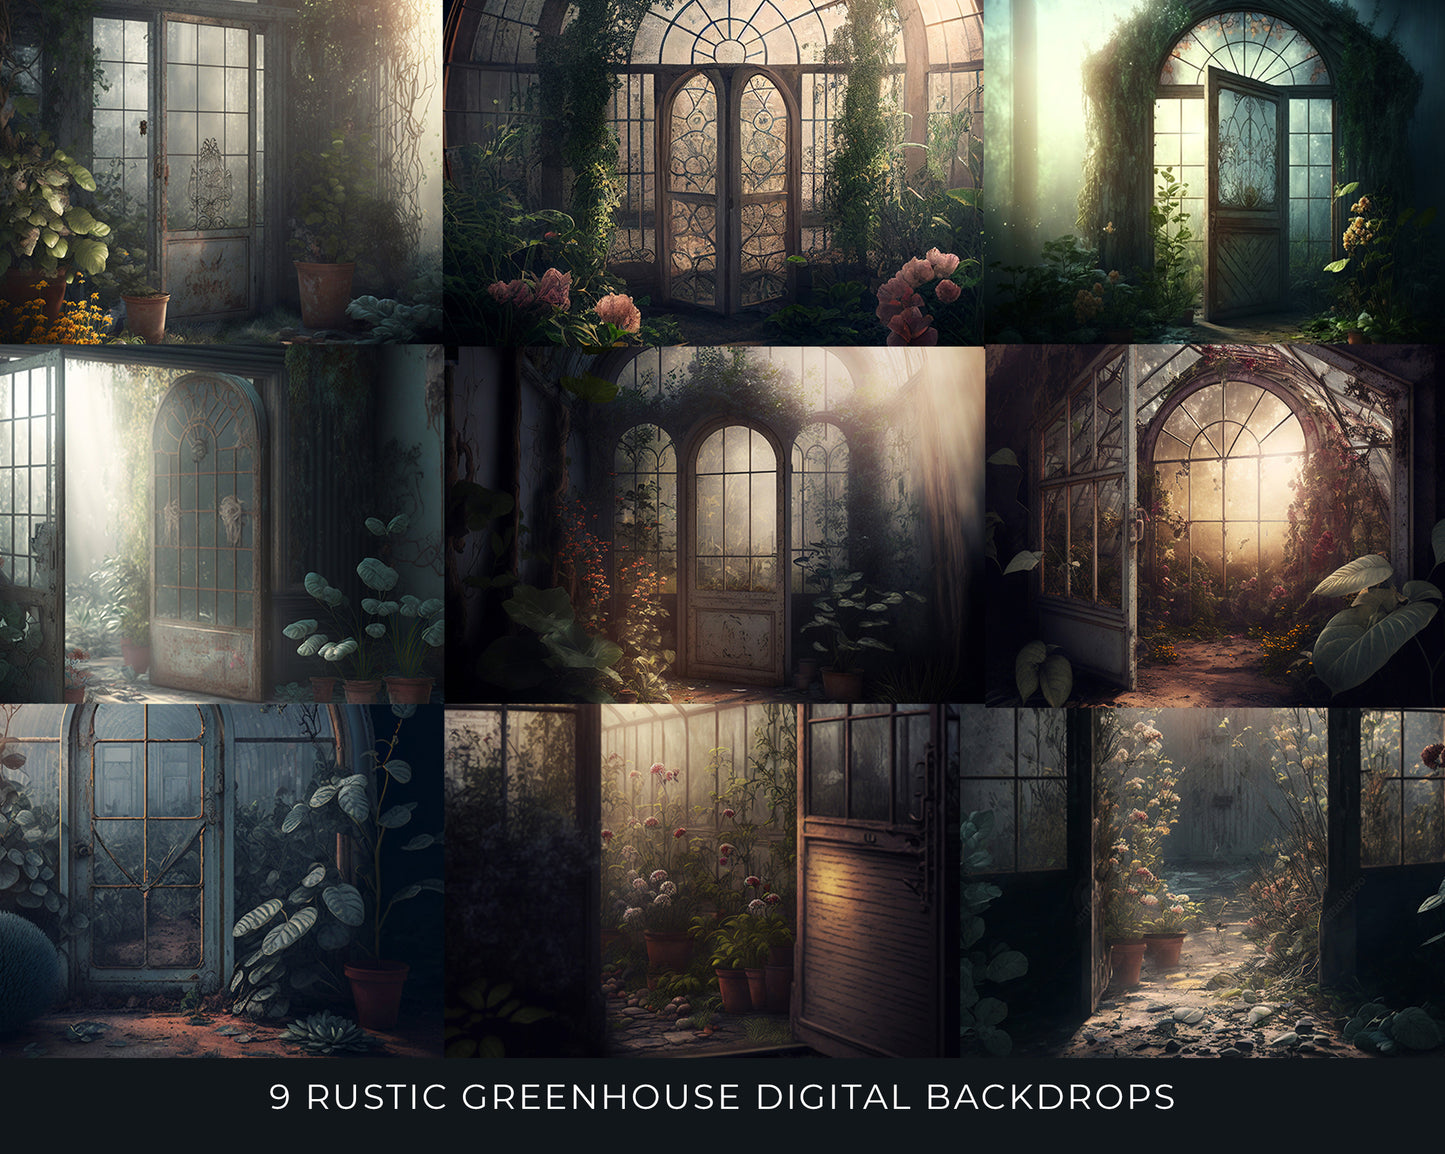 9 Rustic Greenhouse Digital Backdrops